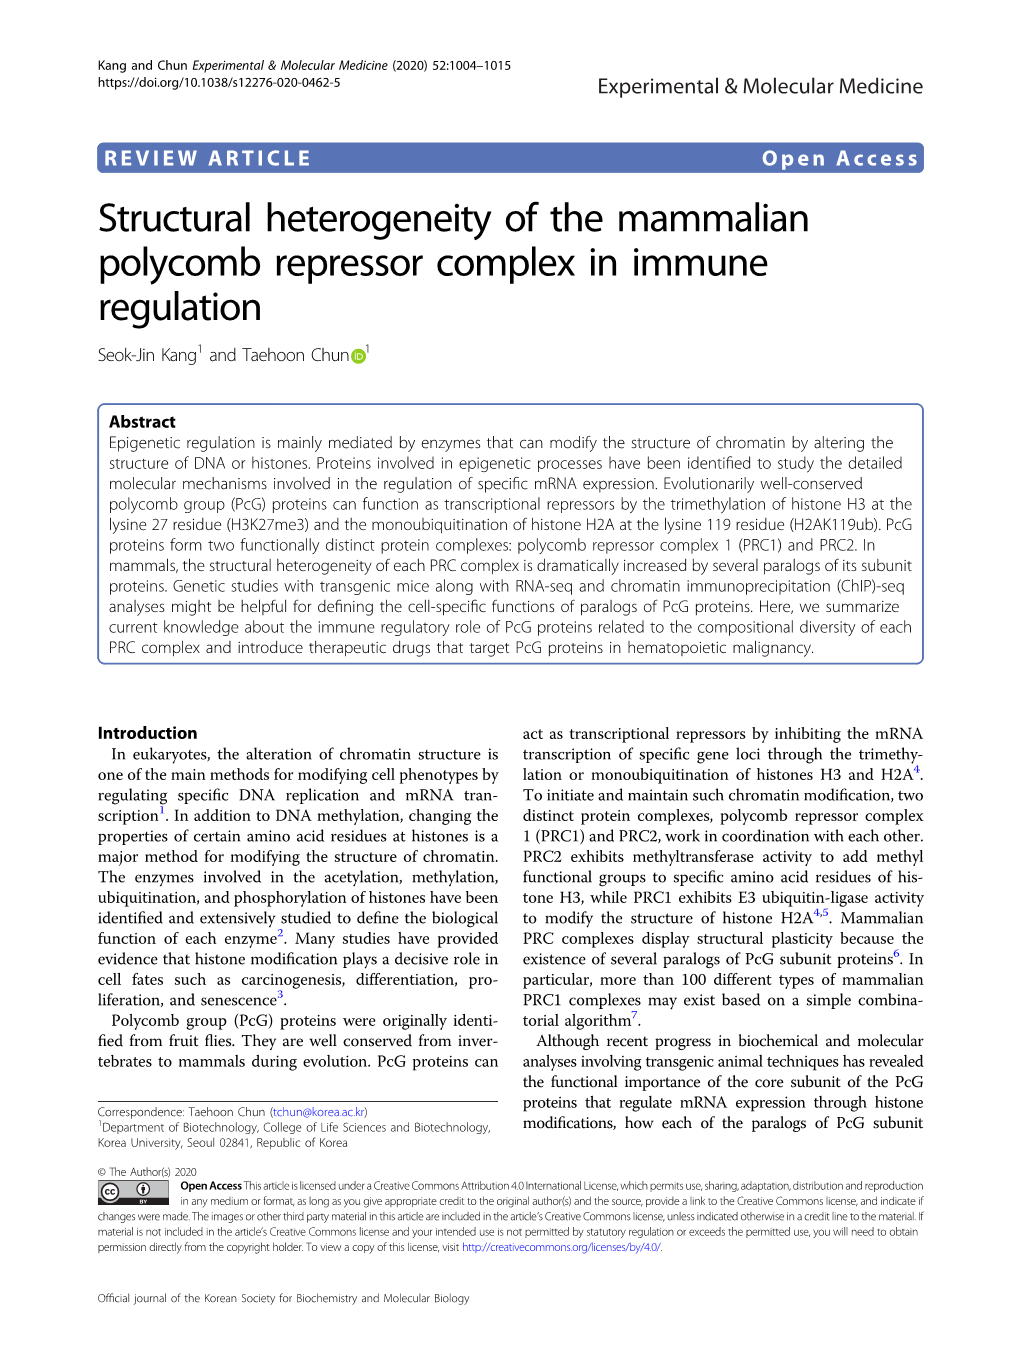 Structural Heterogeneity of the Mammalian Polycomb Repressor Complex in Immune Regulation Seok-Jin Kang1 and Taehoon Chun 1